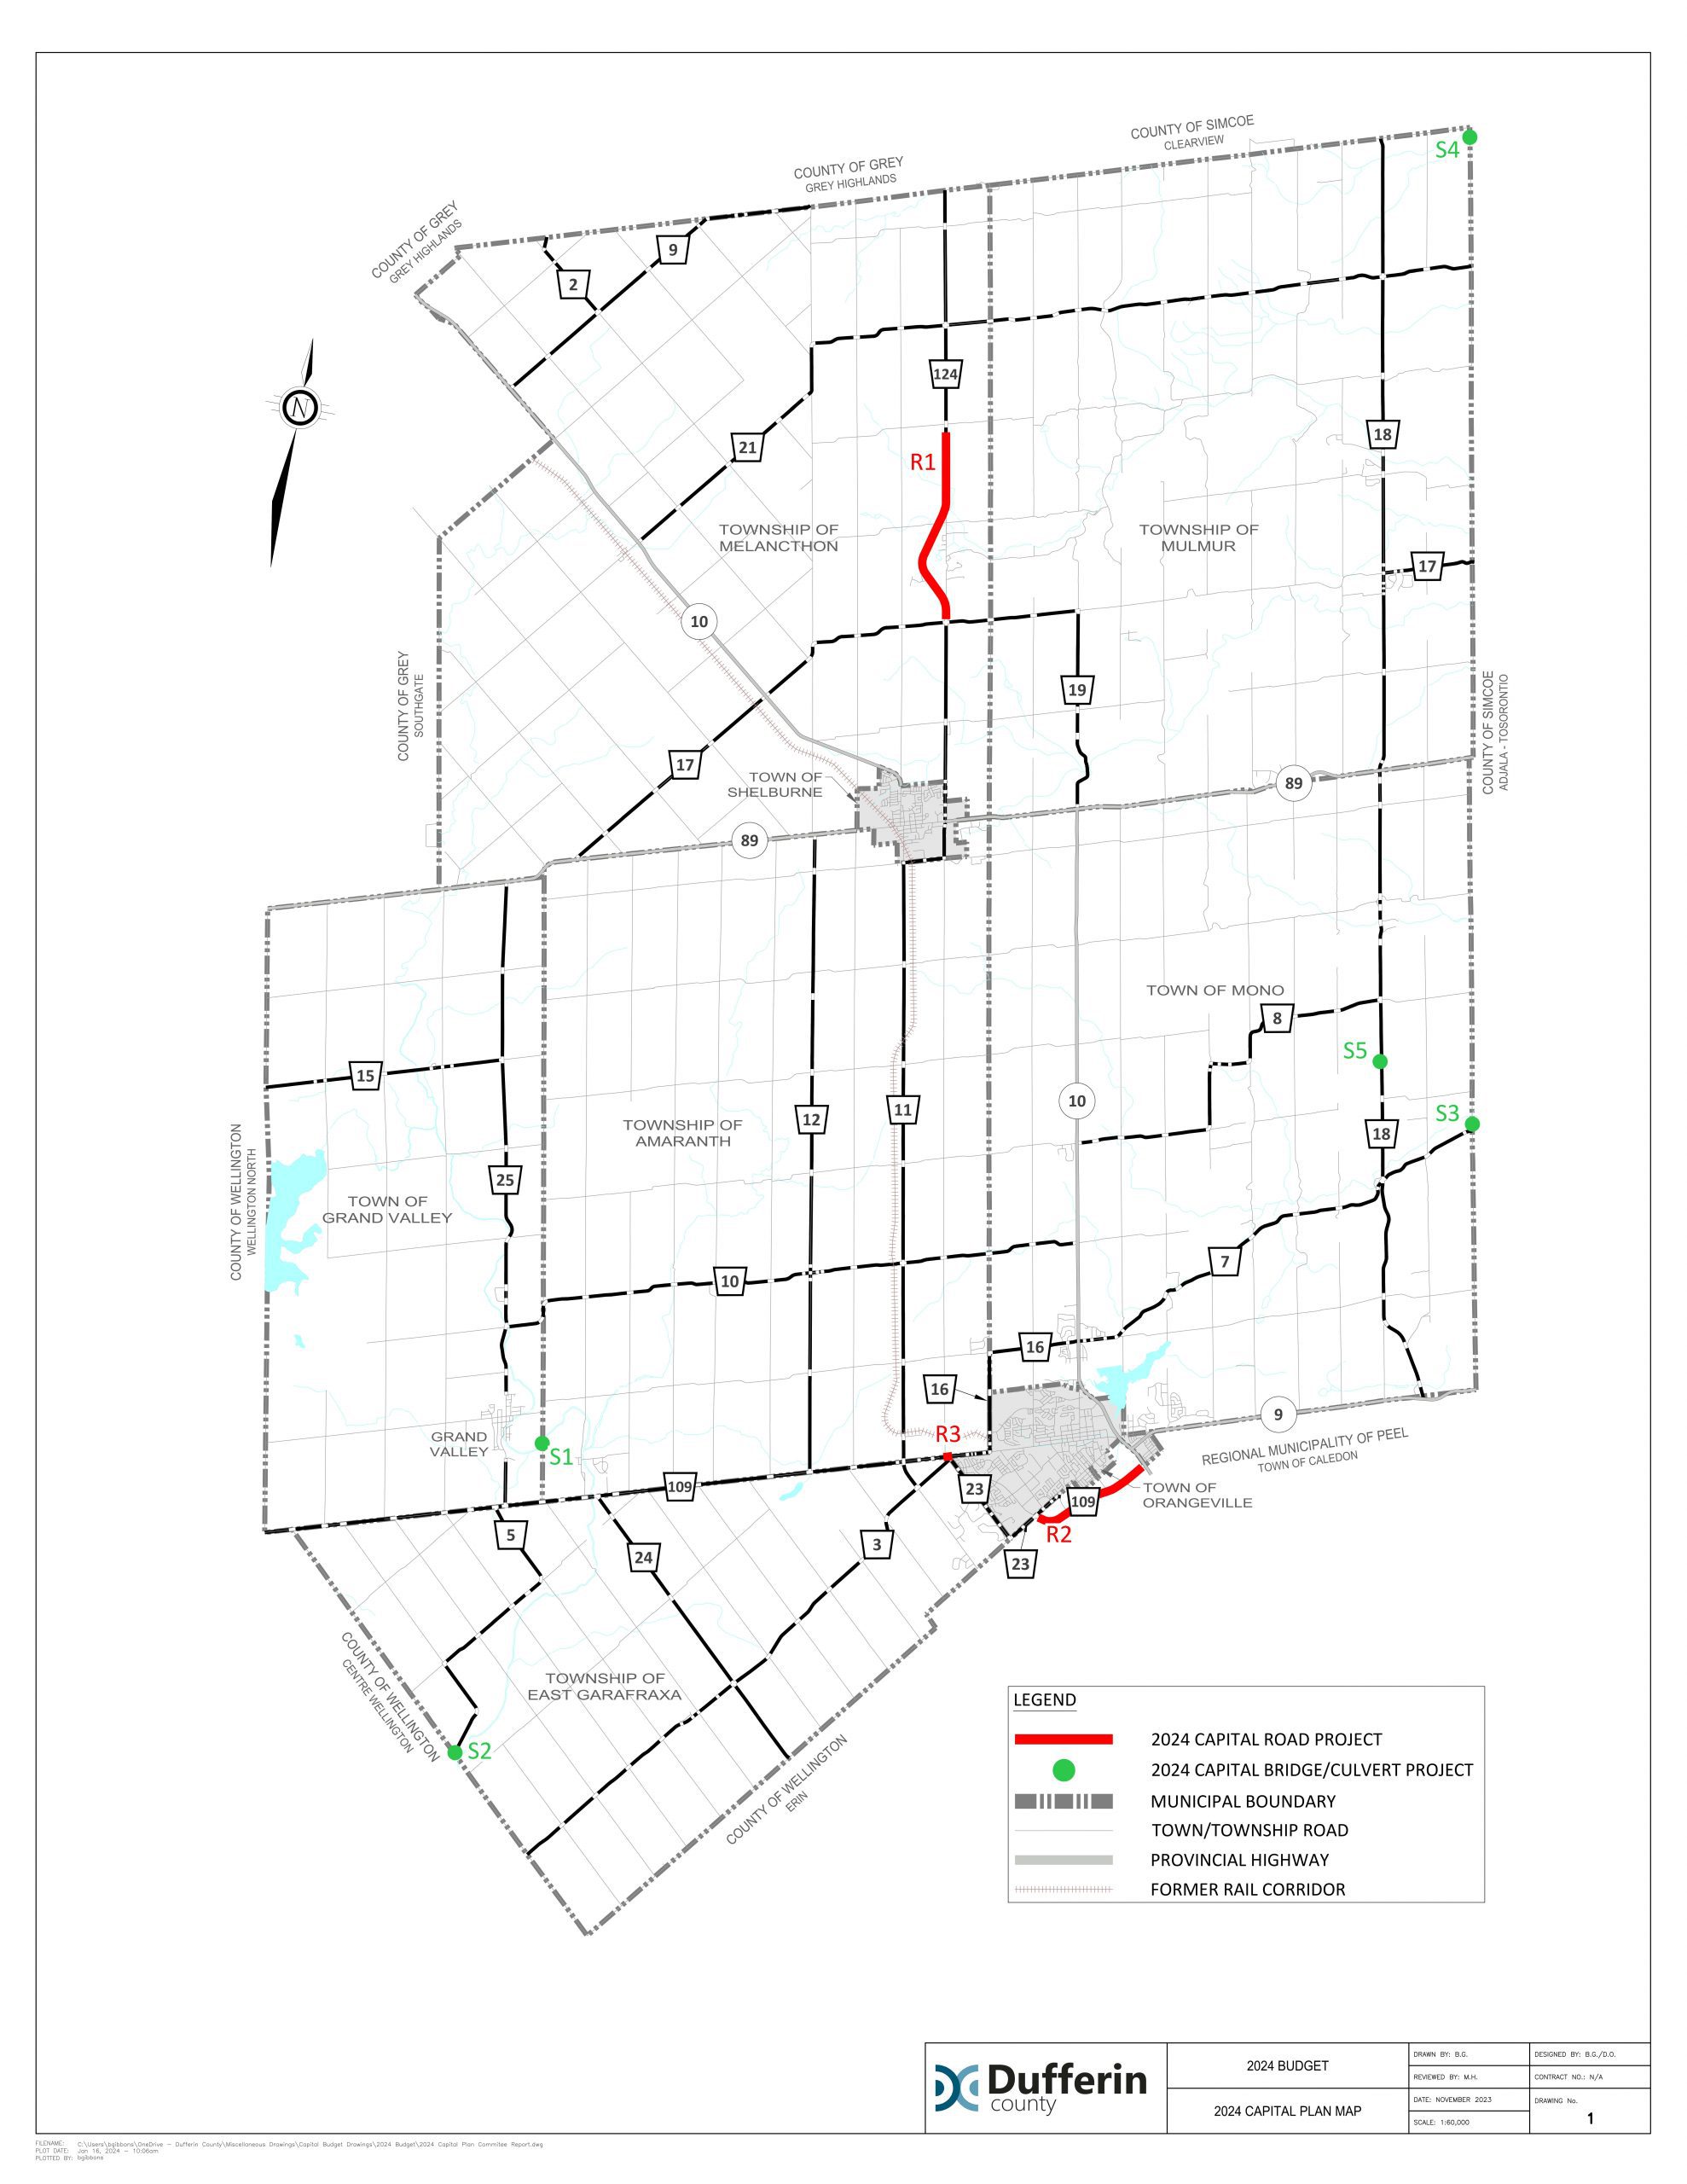 Dufferin County's 2024 Capital Plan Road construction map.